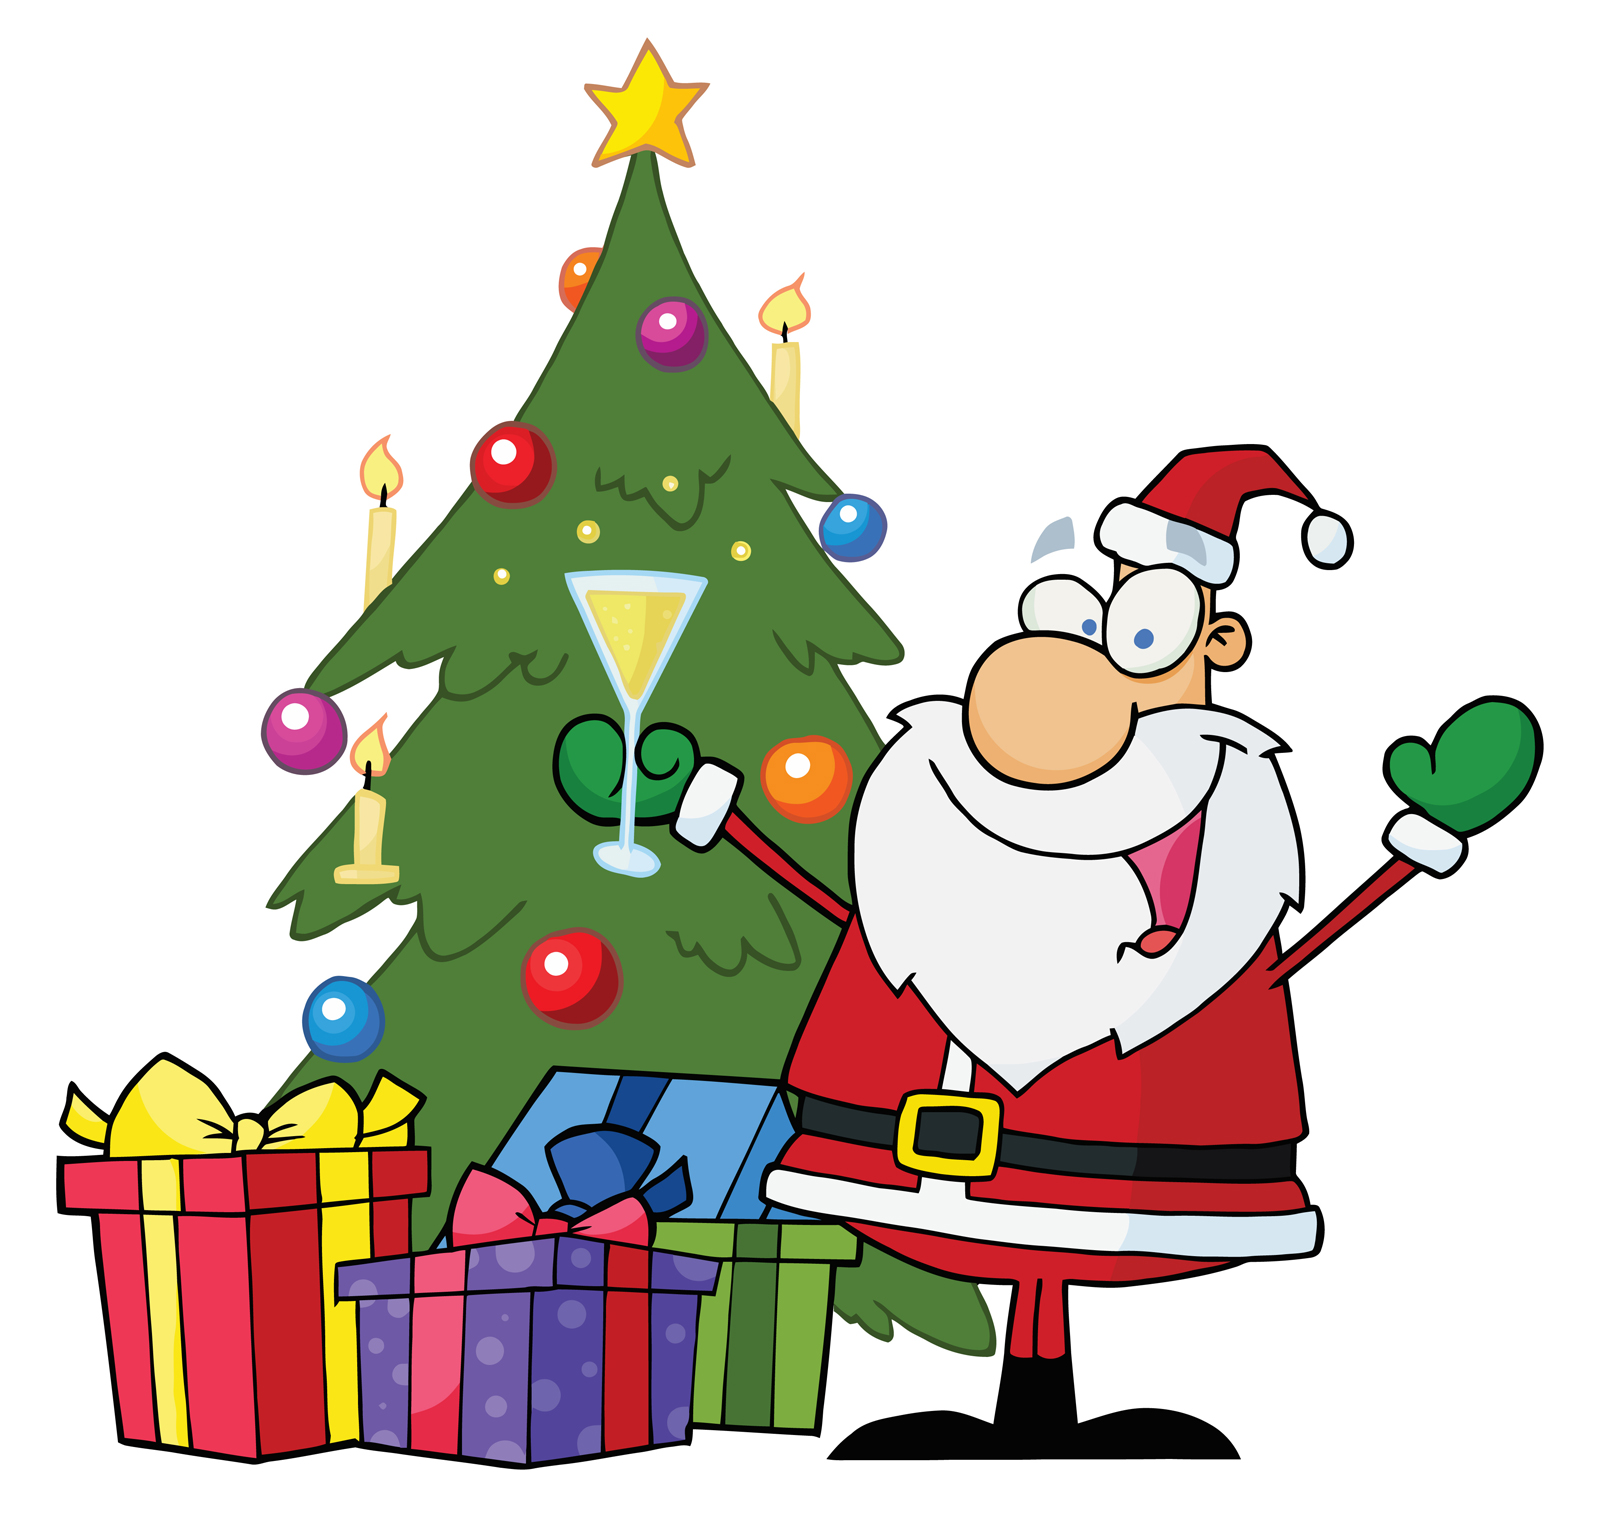 Christmas shopping free clipart - ClipartFox